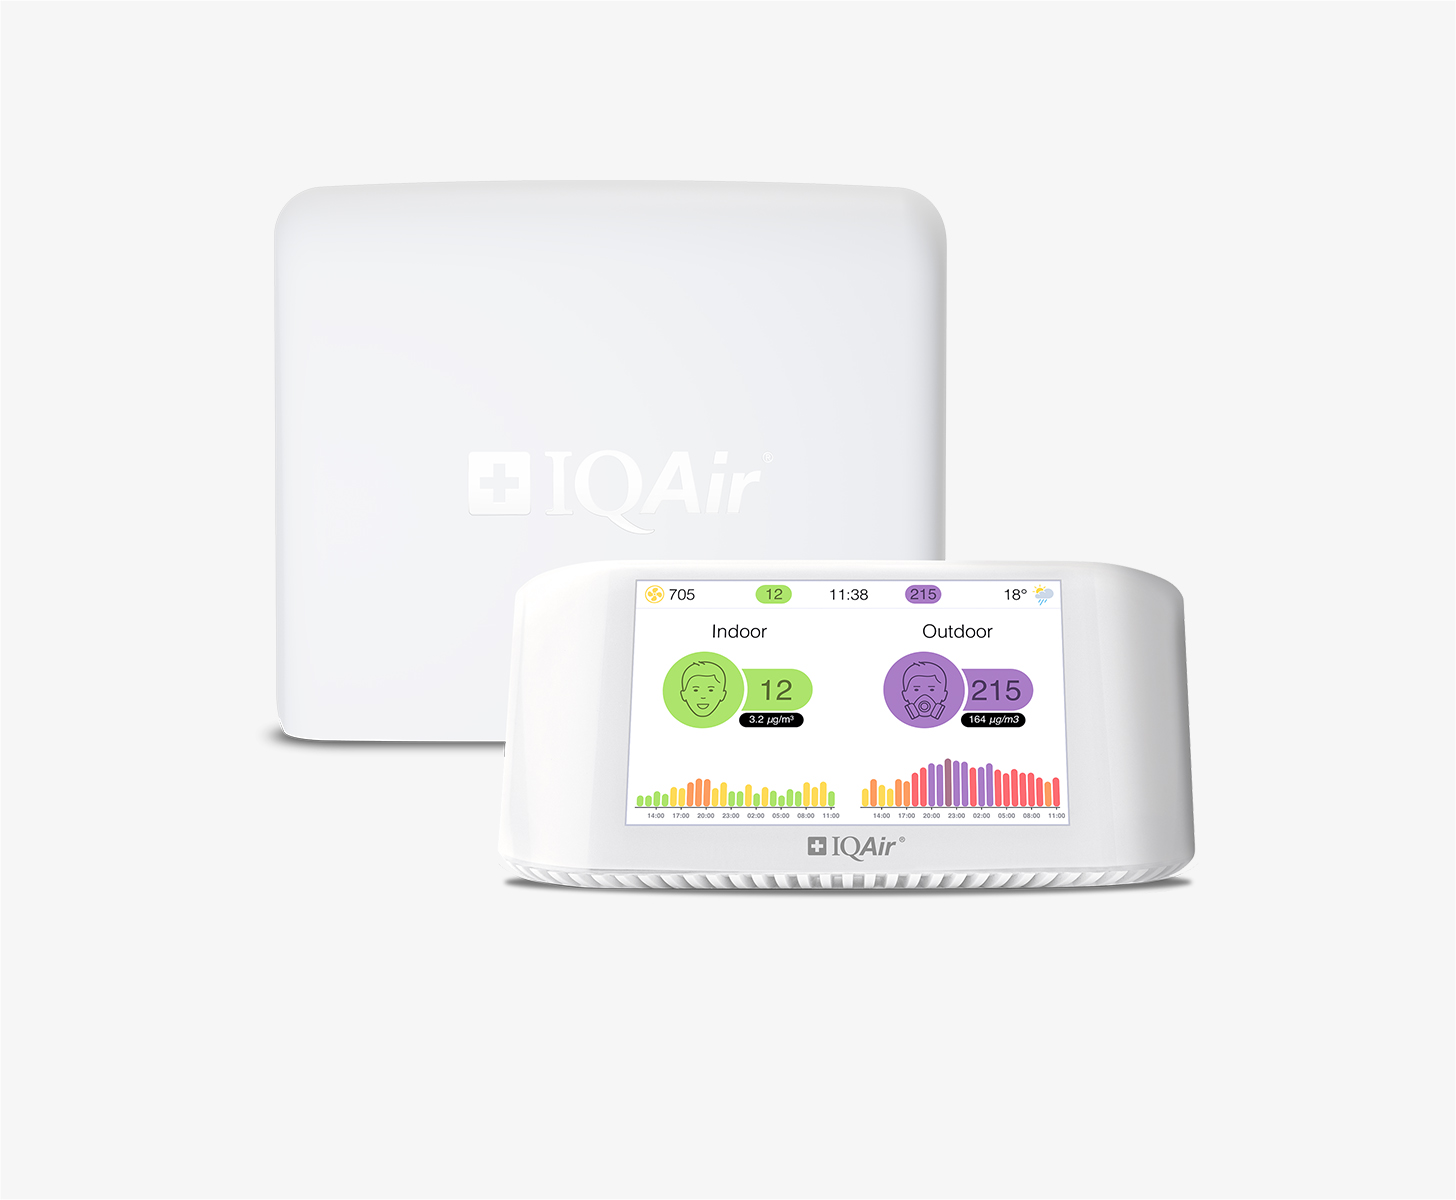 IQAir's Air quality monitors